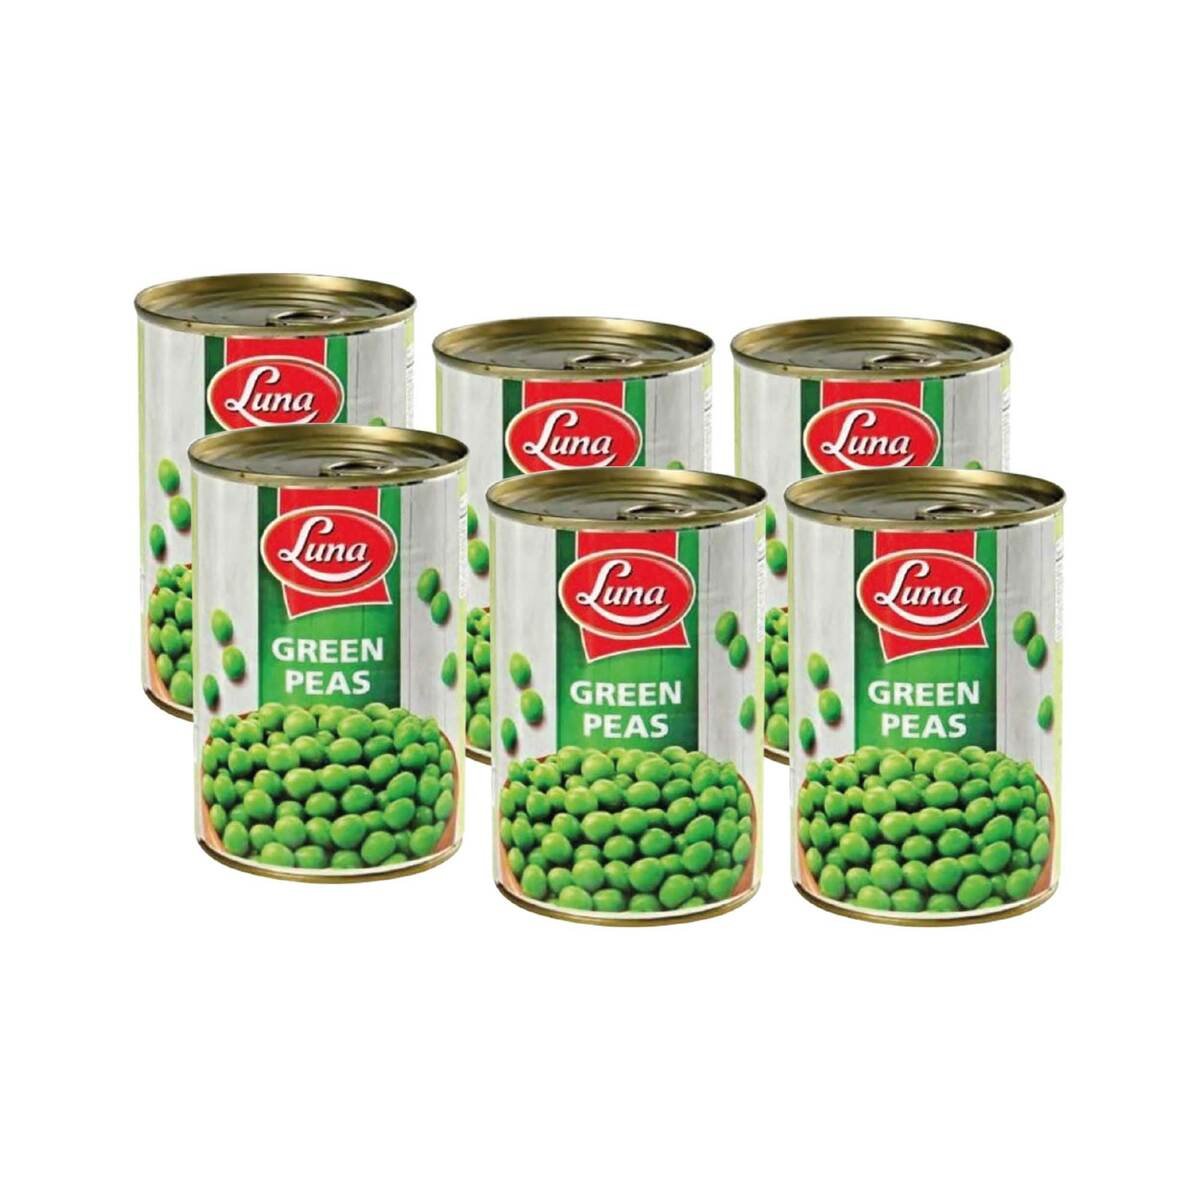 Luna Green Peas Value Pack 6 x 380 g